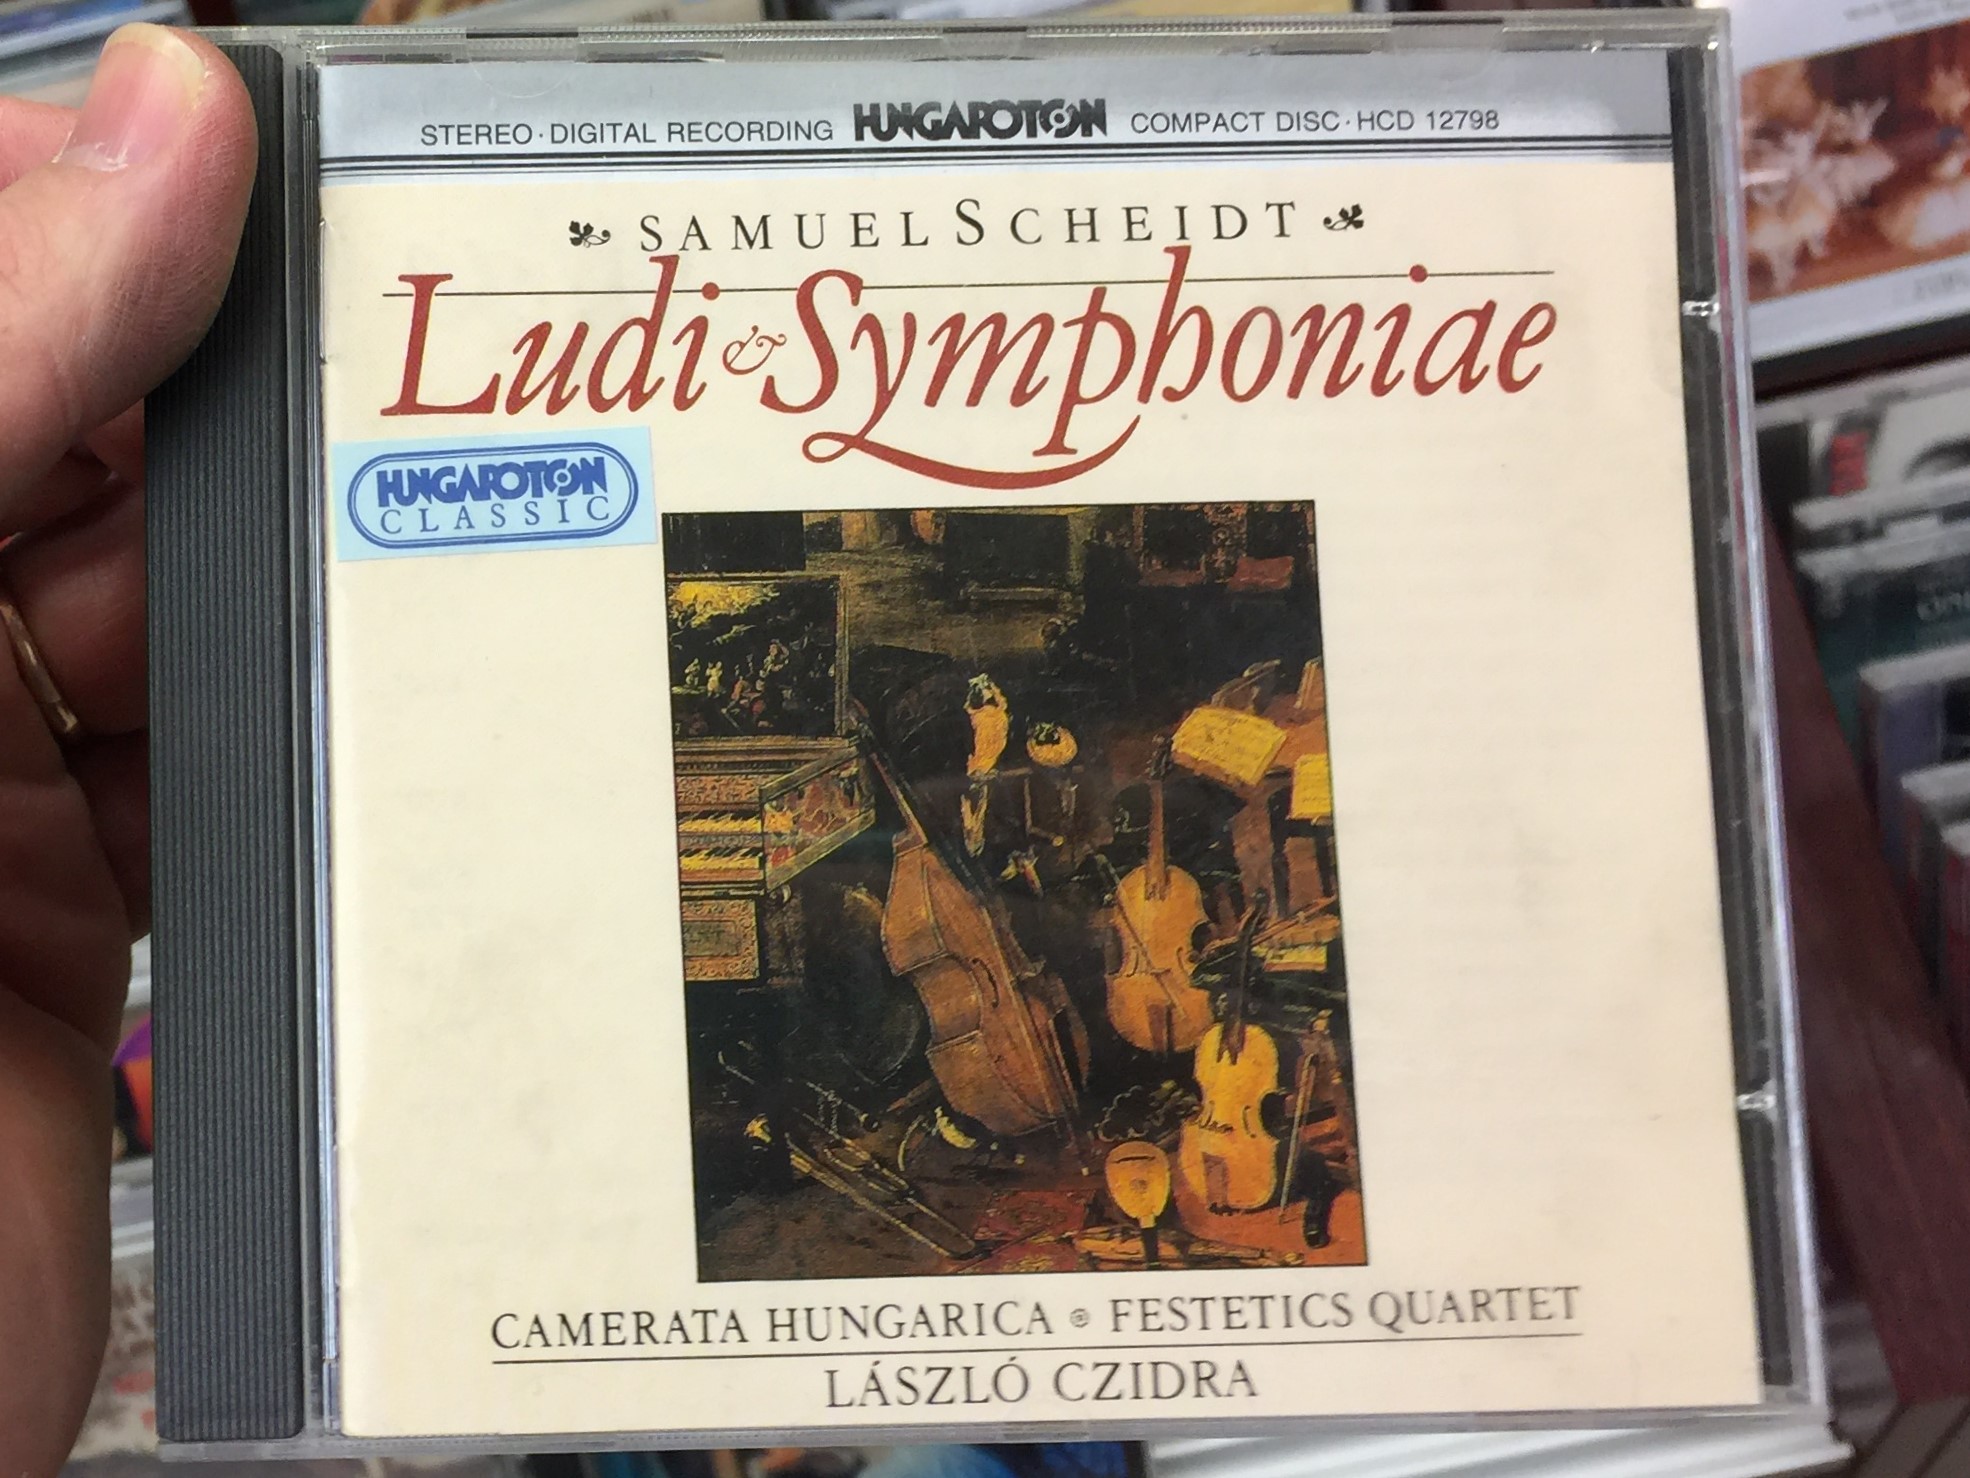 samuel-scheidt-ludi-symphoniae-camerata-hungarica-festetics-quartet-l-szl-czidra-hungaroton-classic-audio-cd-1989-stereo-hcd-12798-1-.jpg